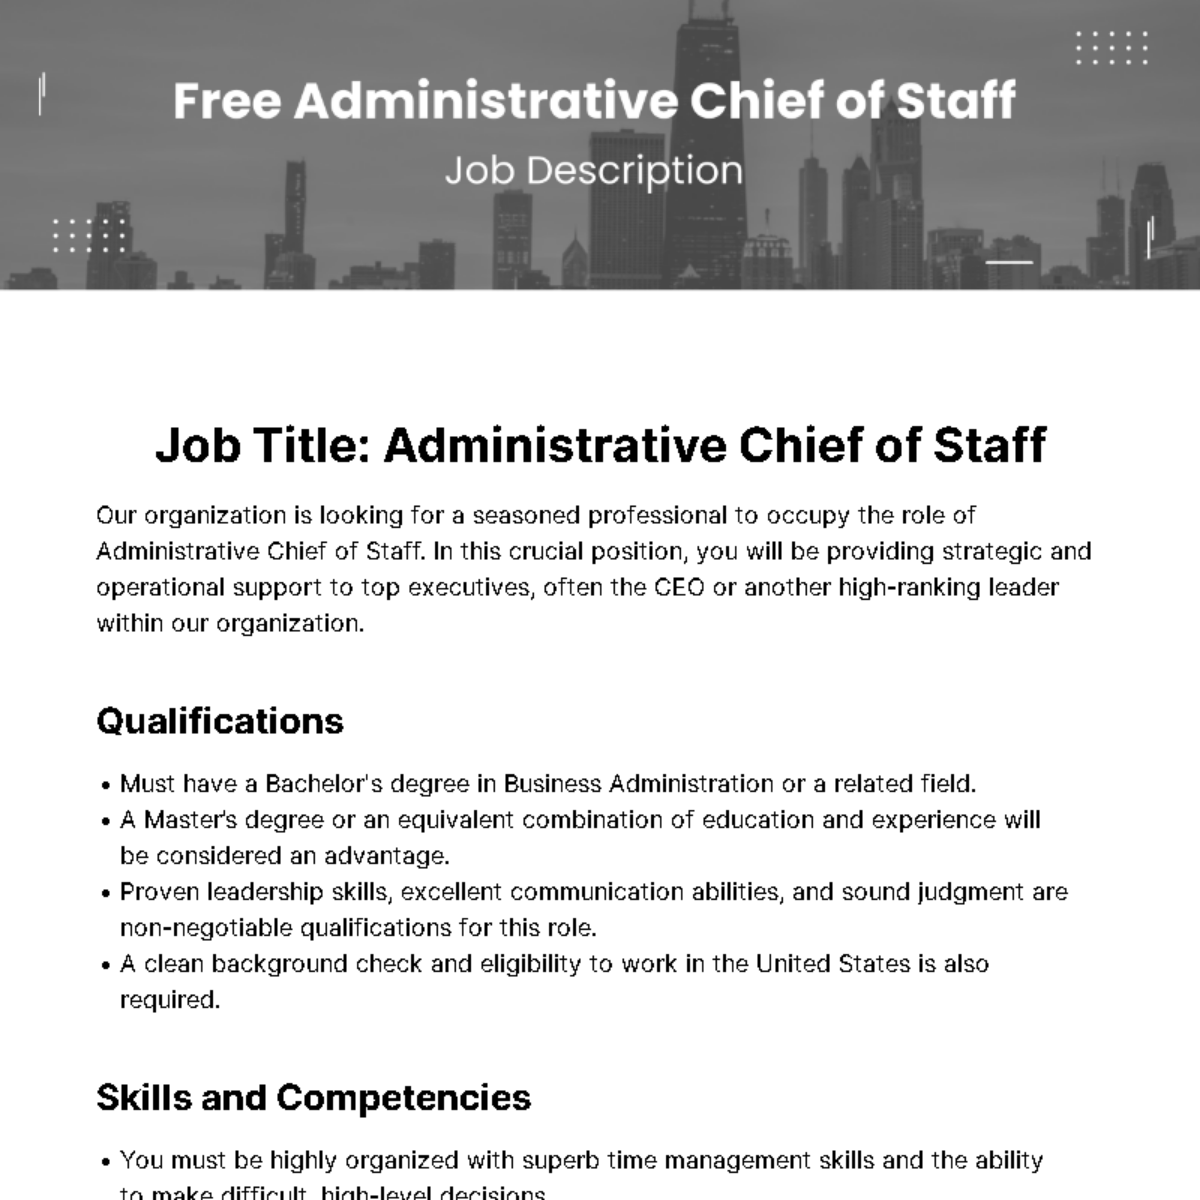 Free Administrative Chief of Staff Job Description Template